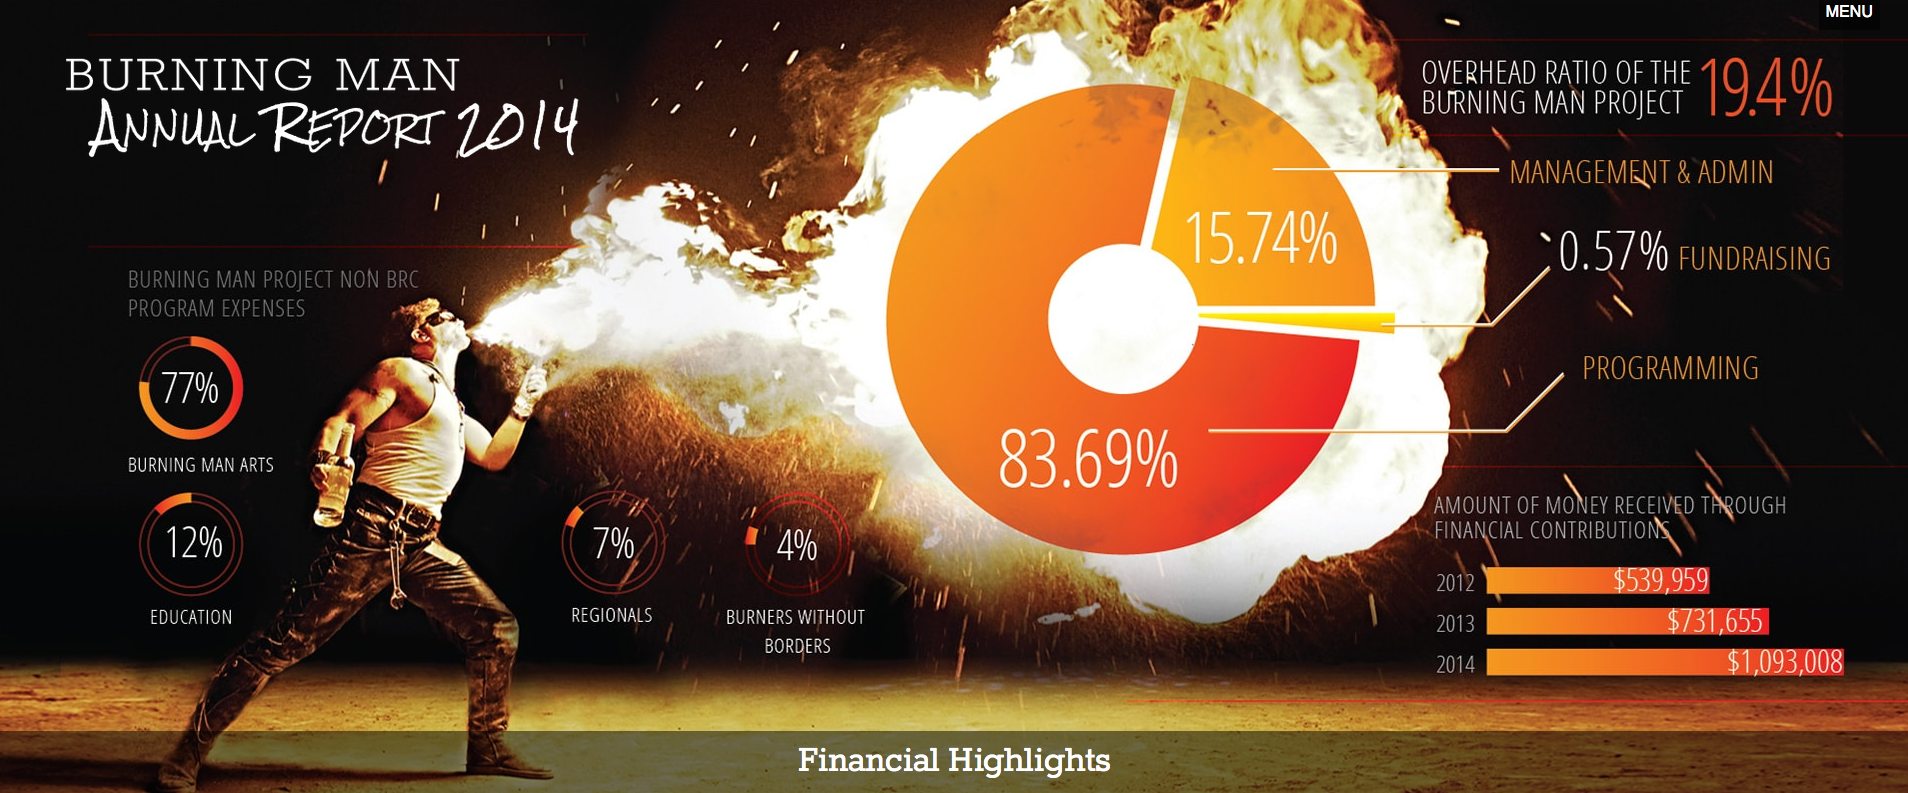 financial_highlights_2014